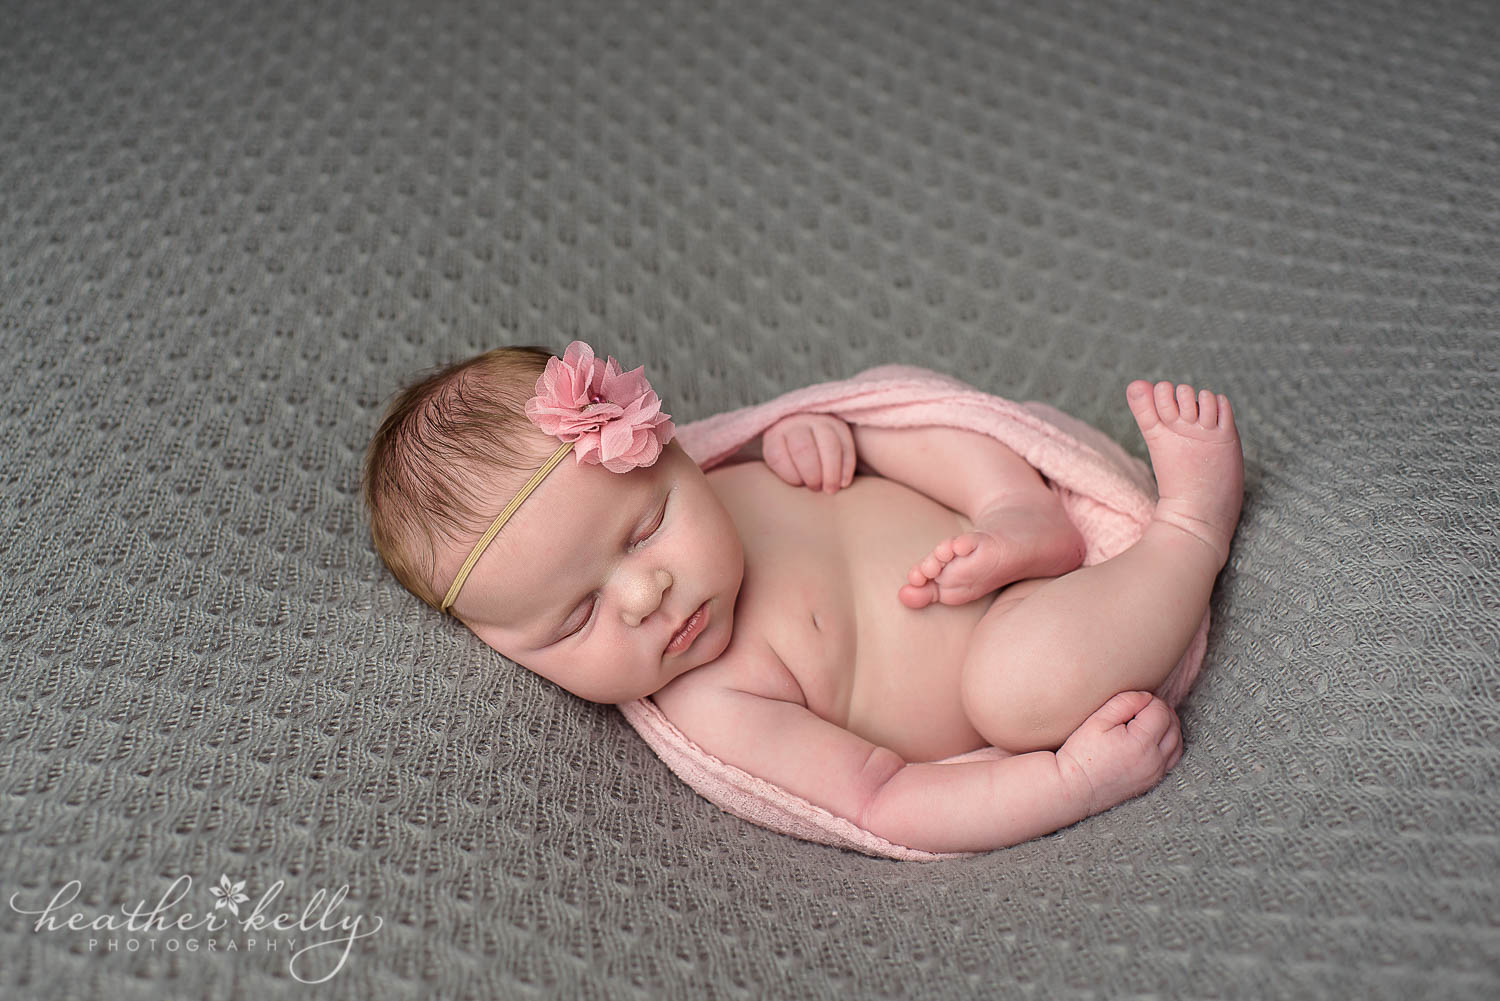 pink wrap and newborn girl. newborn photography poses